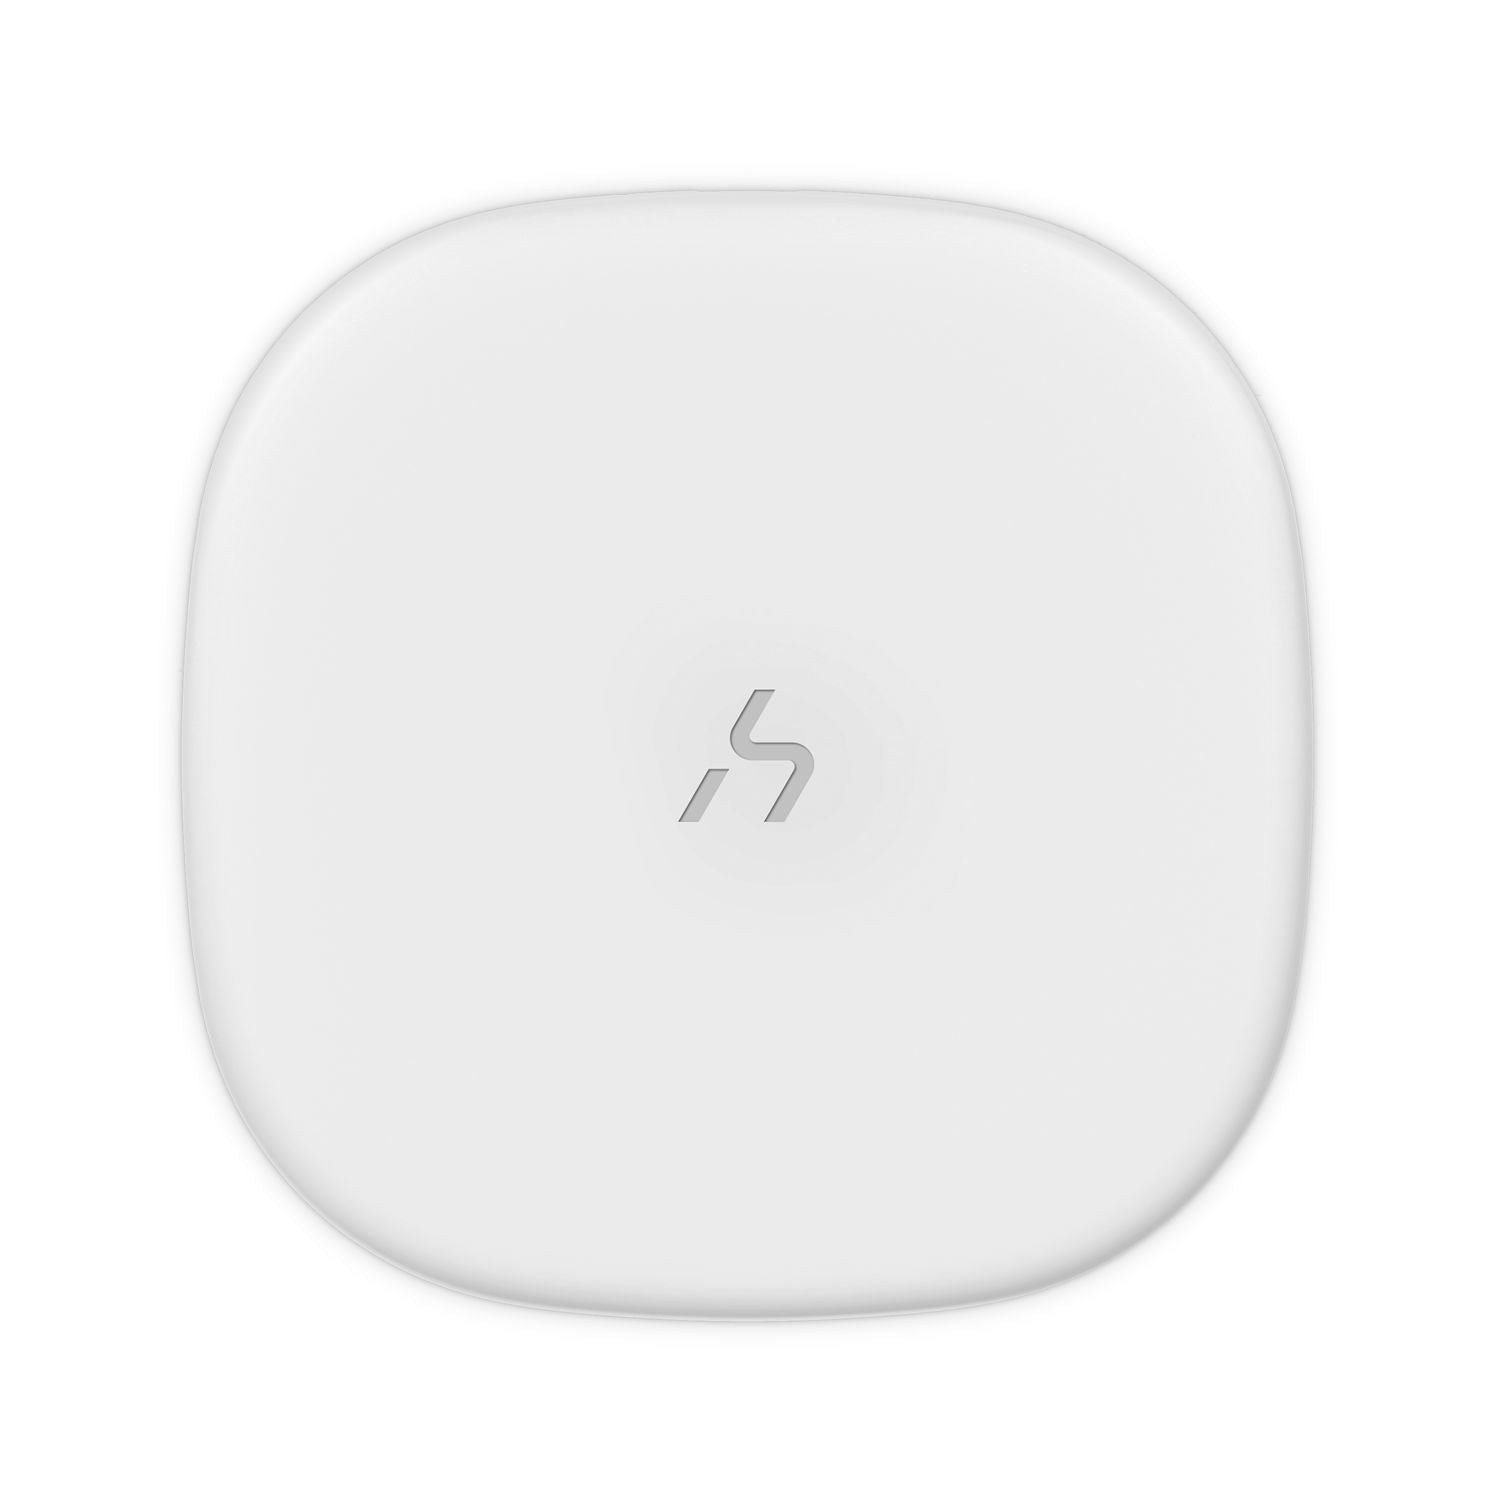 HAVIT H33 Wireless Charging Pad